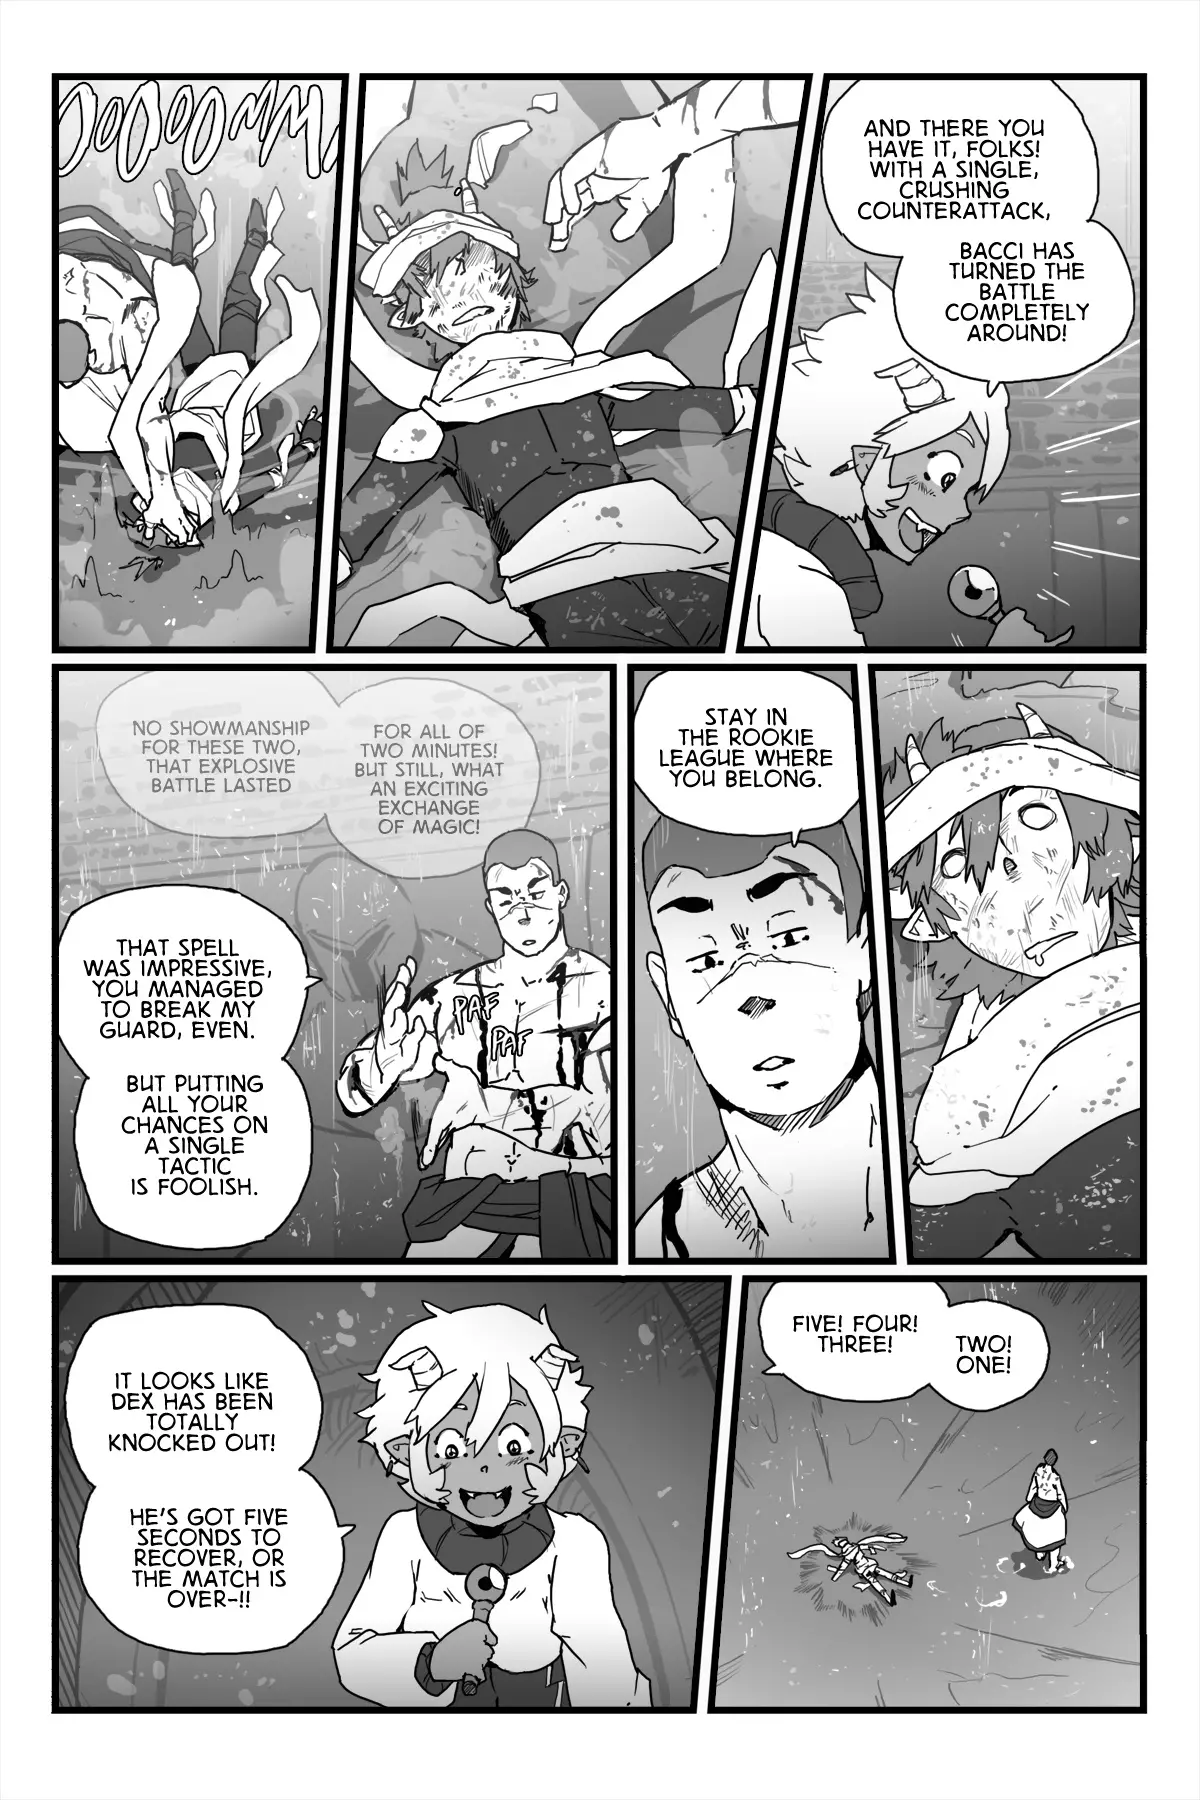 Spellcross - 12 page 30-79848ac4